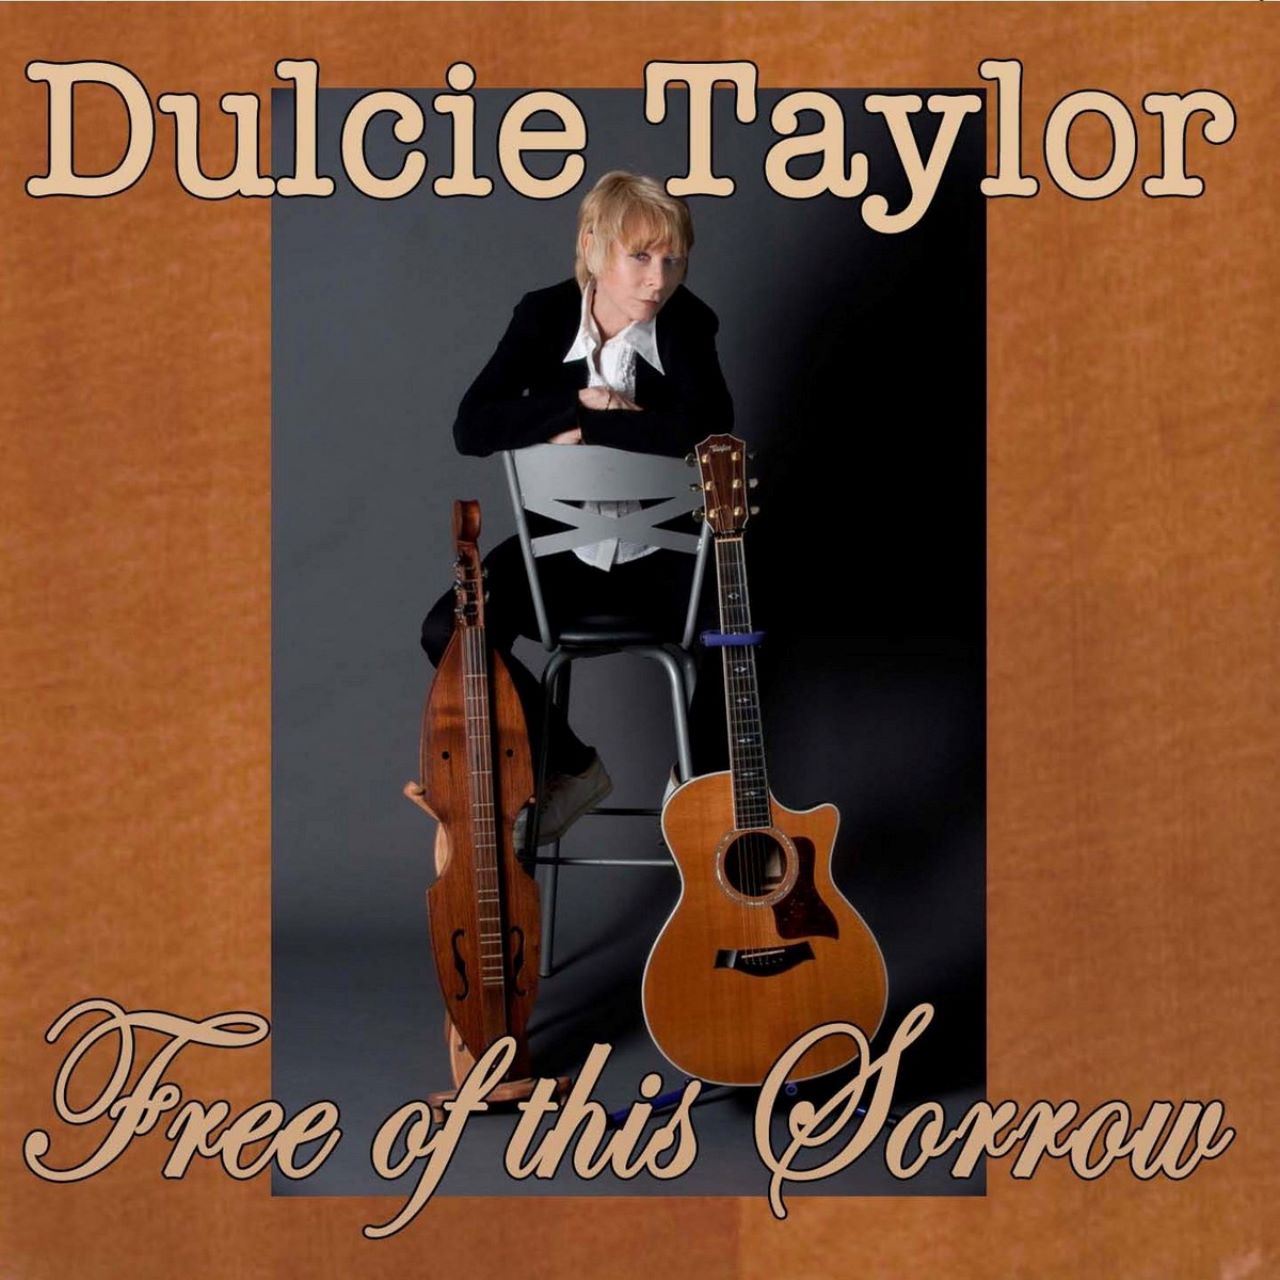 Dulcie Taylor - Free Of This Sorrow cover album